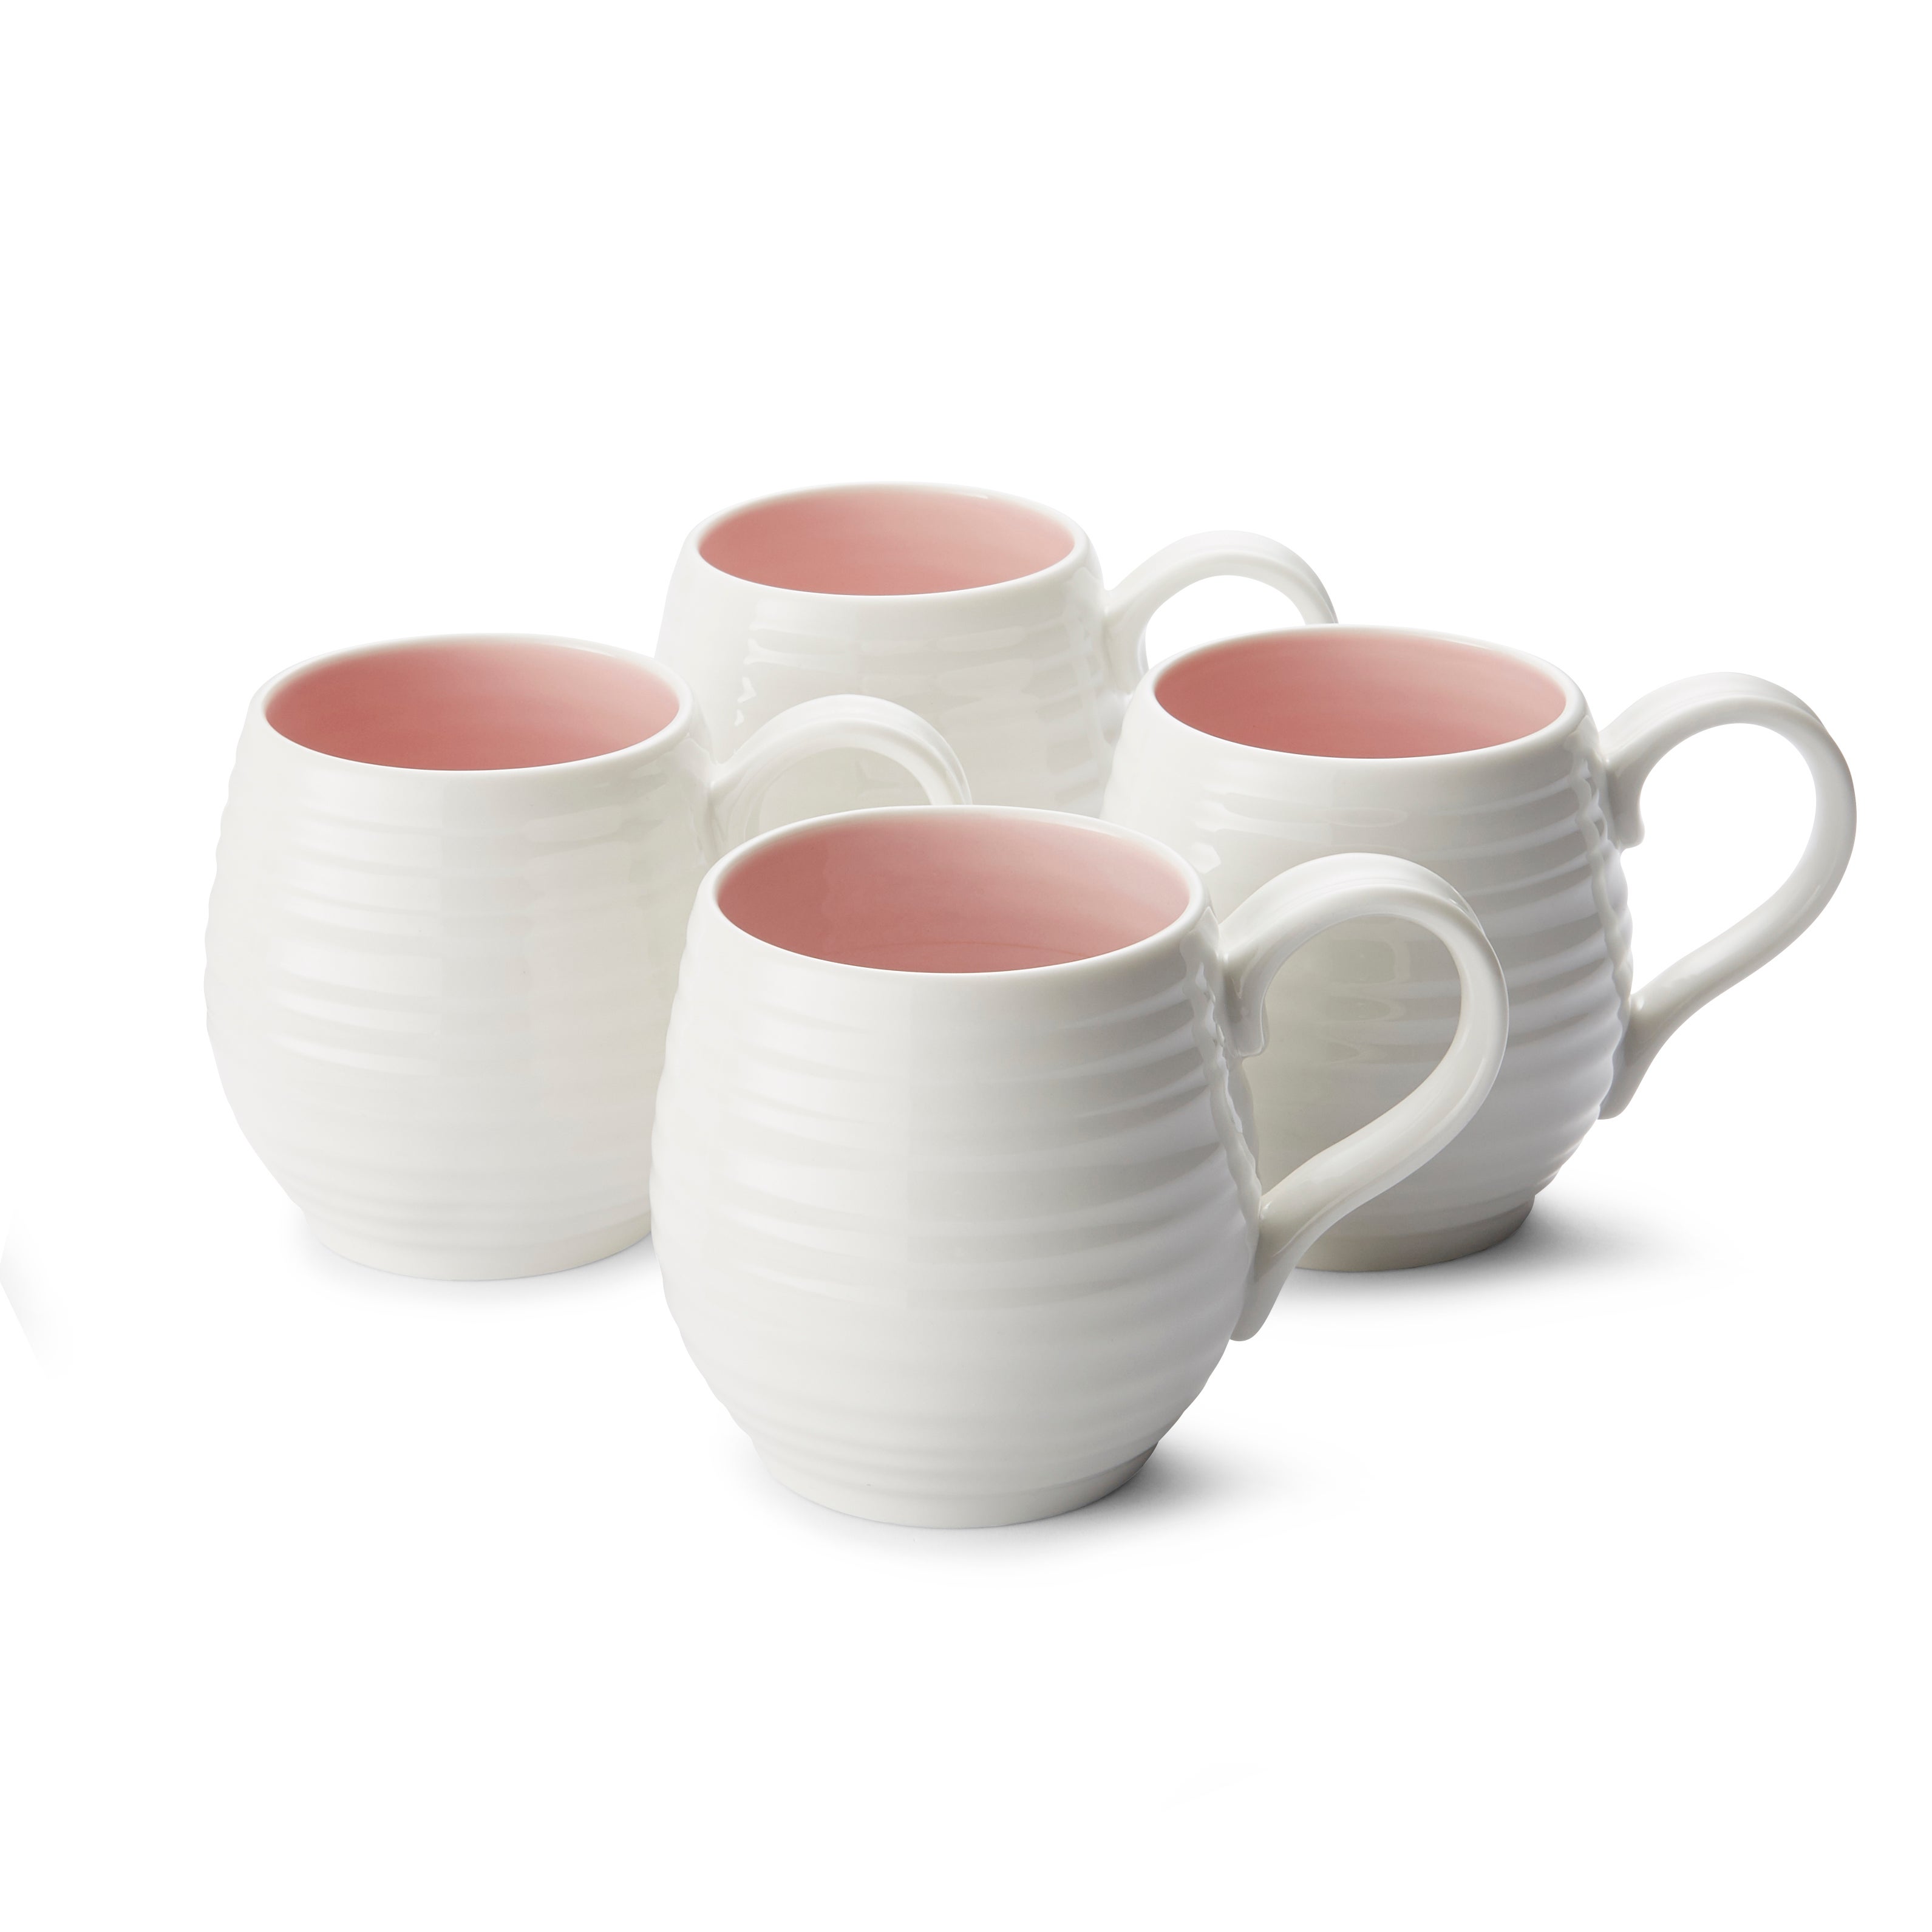 Photos - Glass Set of 4 Sophie Conran for Pink Honey Pot Mugs White